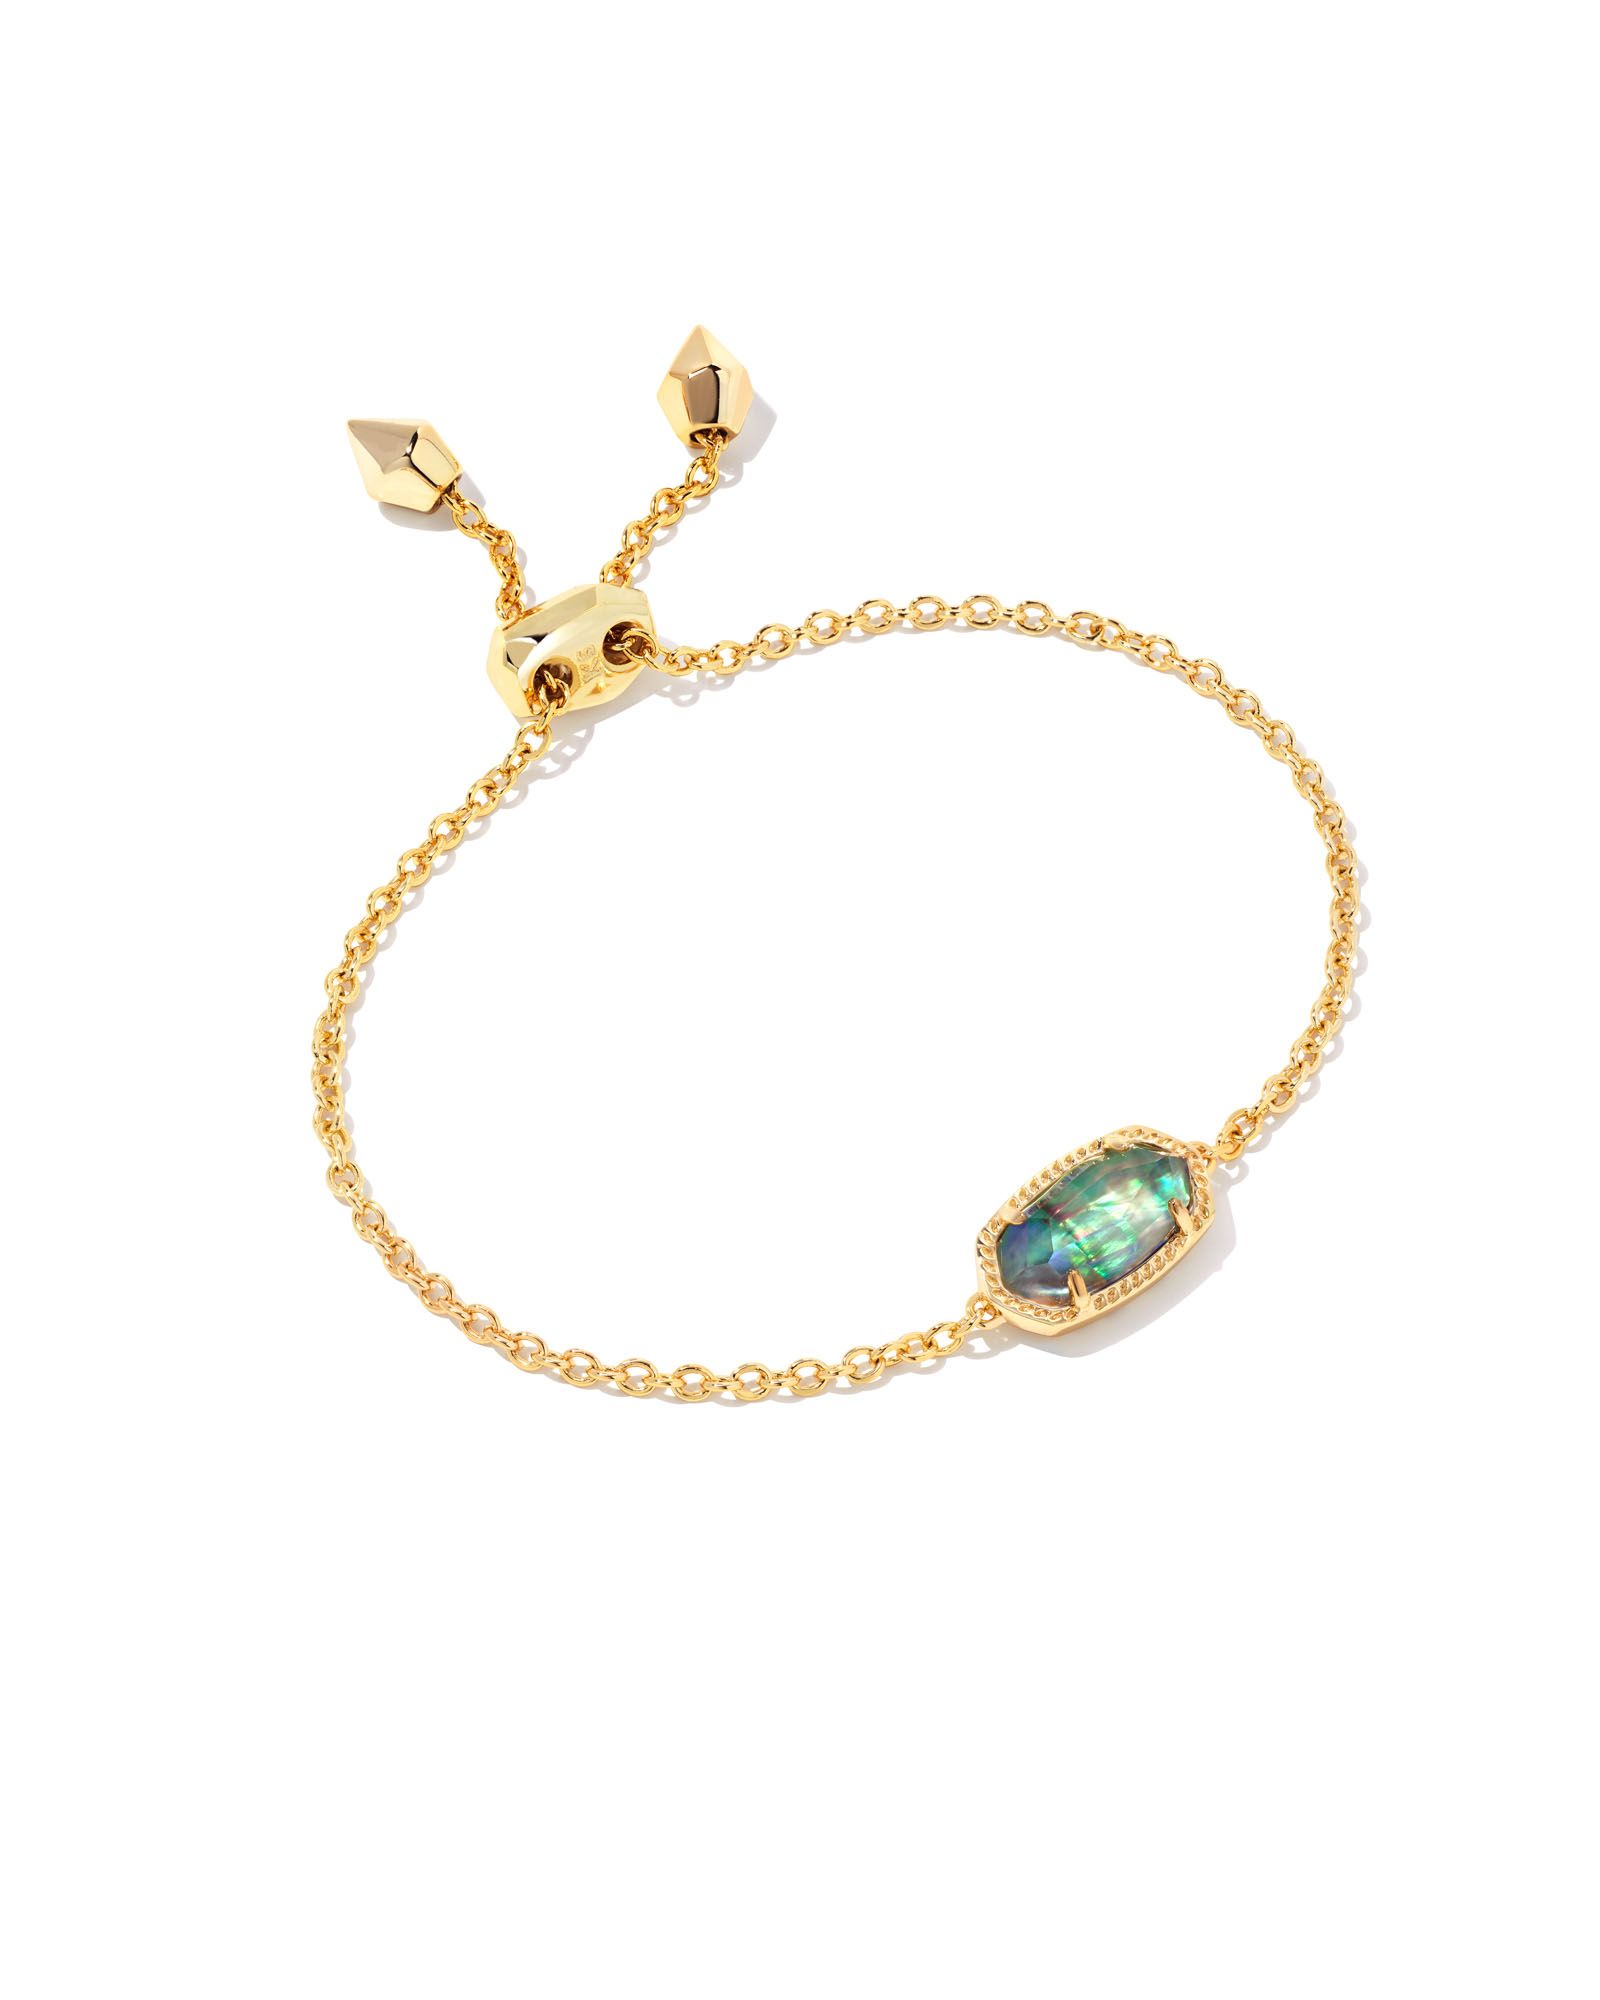 Elaina Gold Adjustable Chain Bracelet in Lilac Abalone | Kendra Scott | Kendra Scott